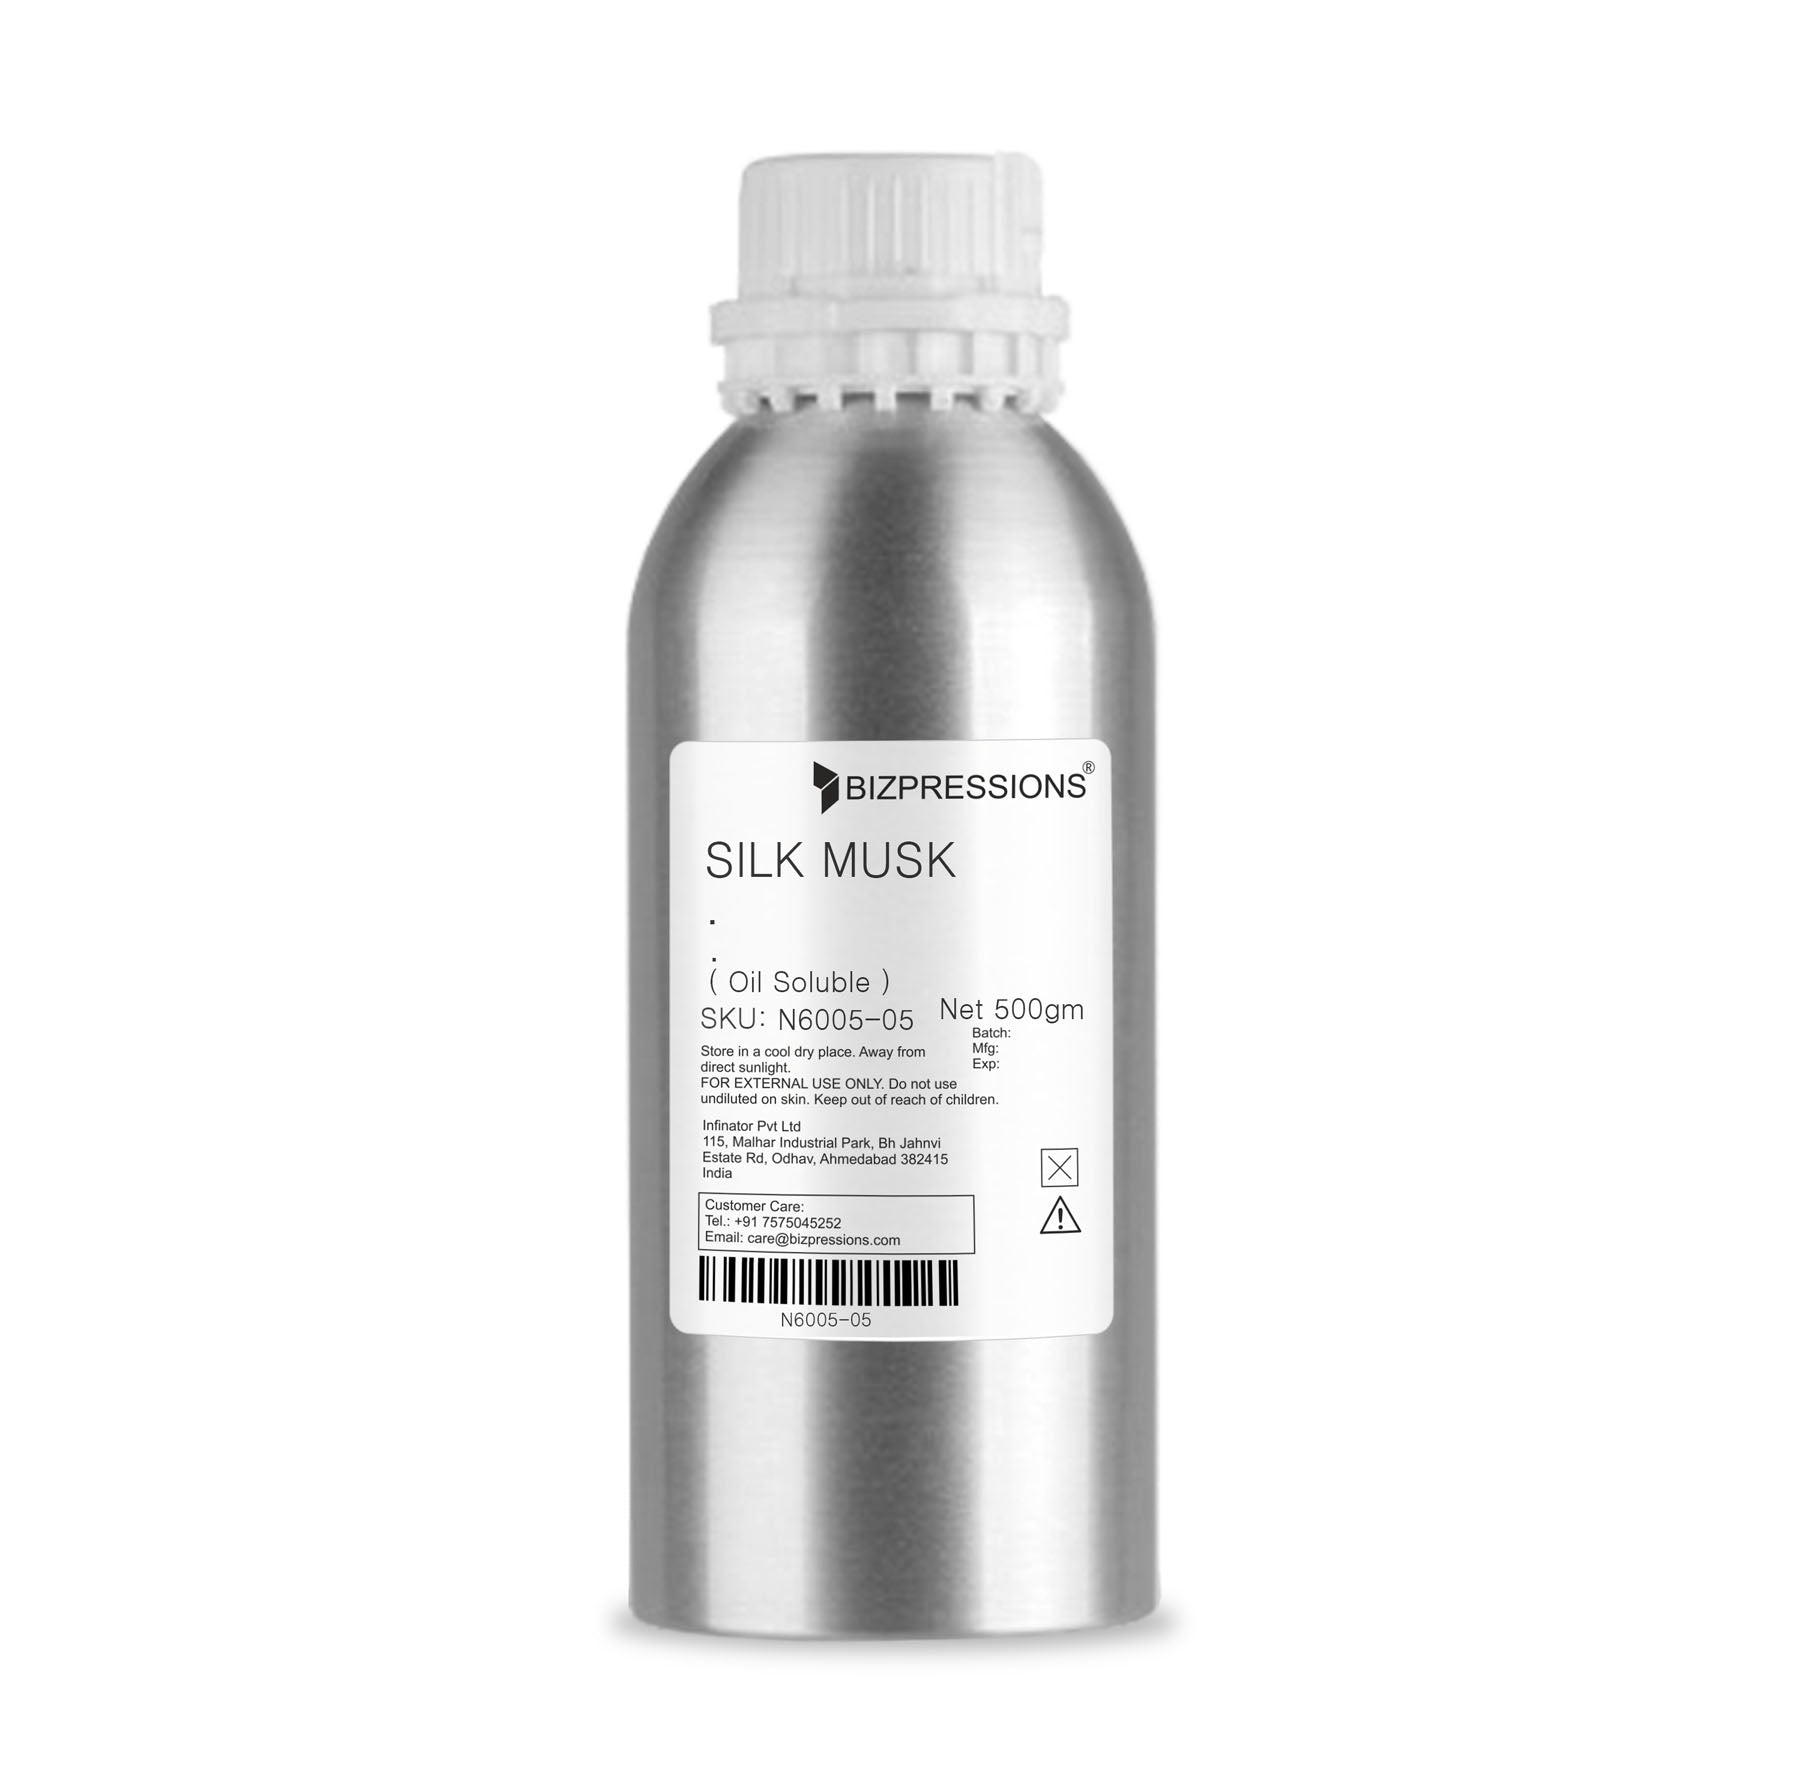 SILK MUSK - Fragrance ( Oil Soluble ) - 500 gm